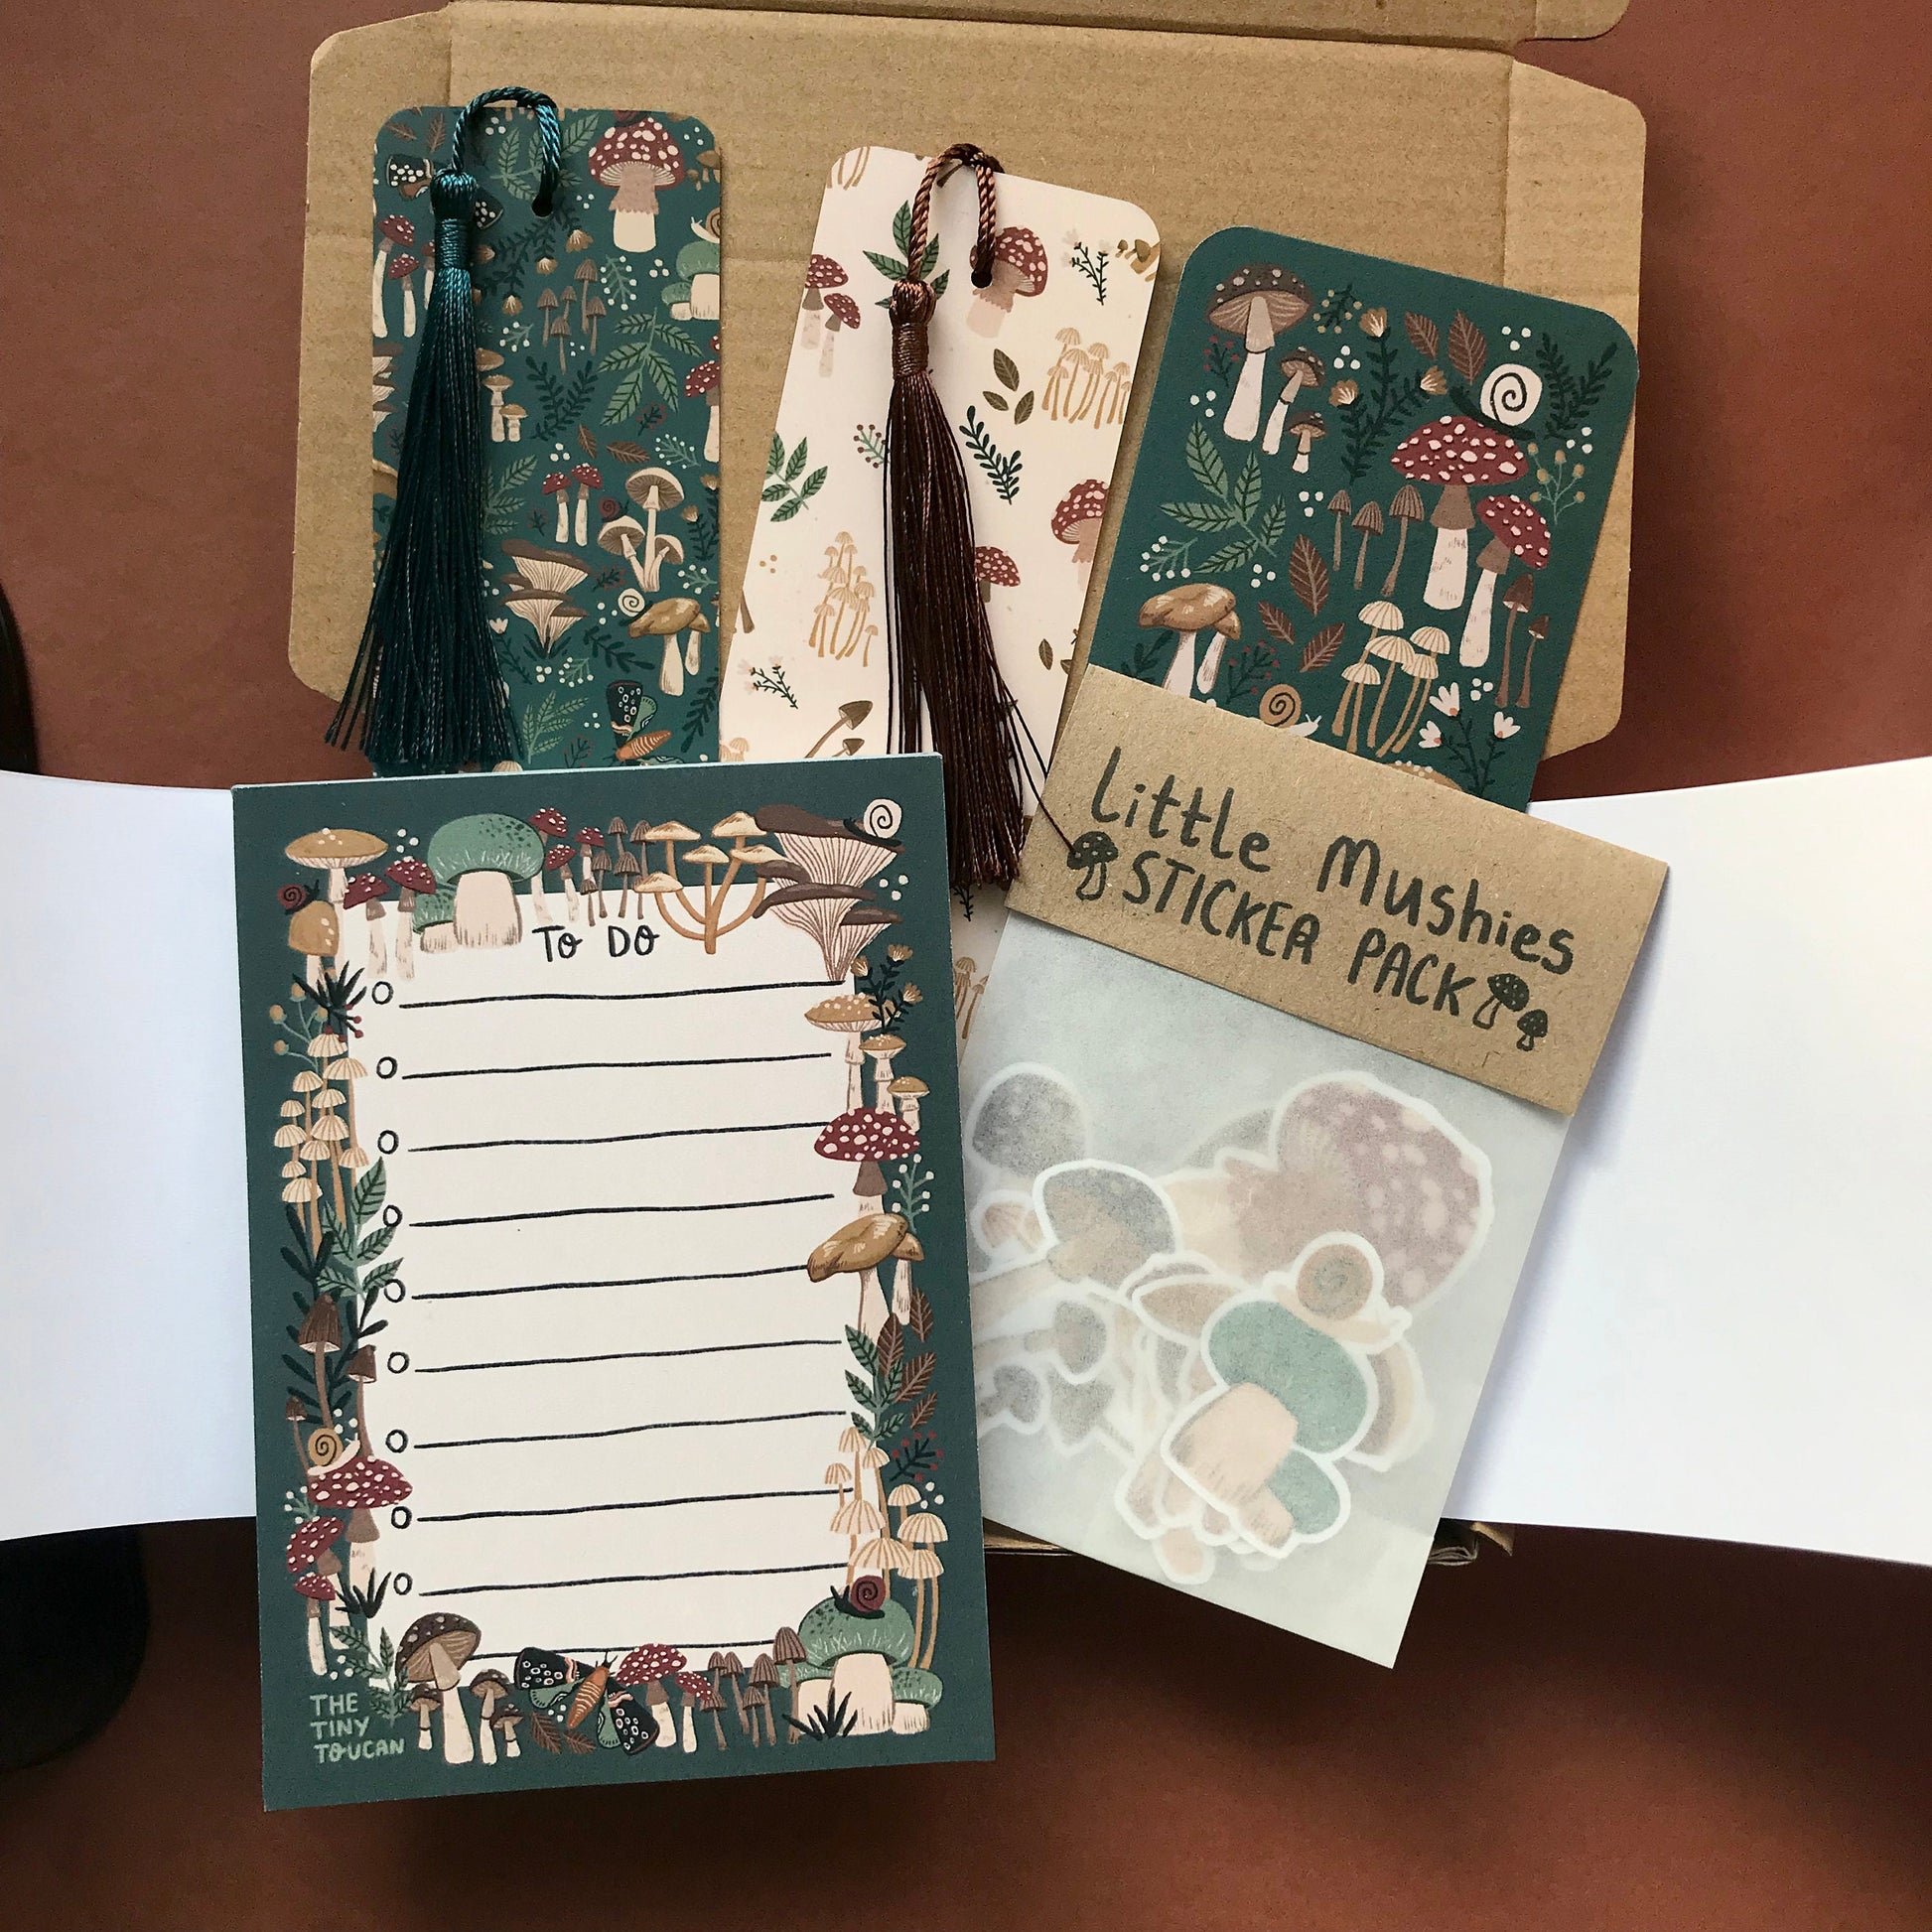 Little Mushies Gift Box-  Illustrated mushroom stationery gift box- Fungi- Notepad- Stickers- bookmark- book lover- Cottagecore